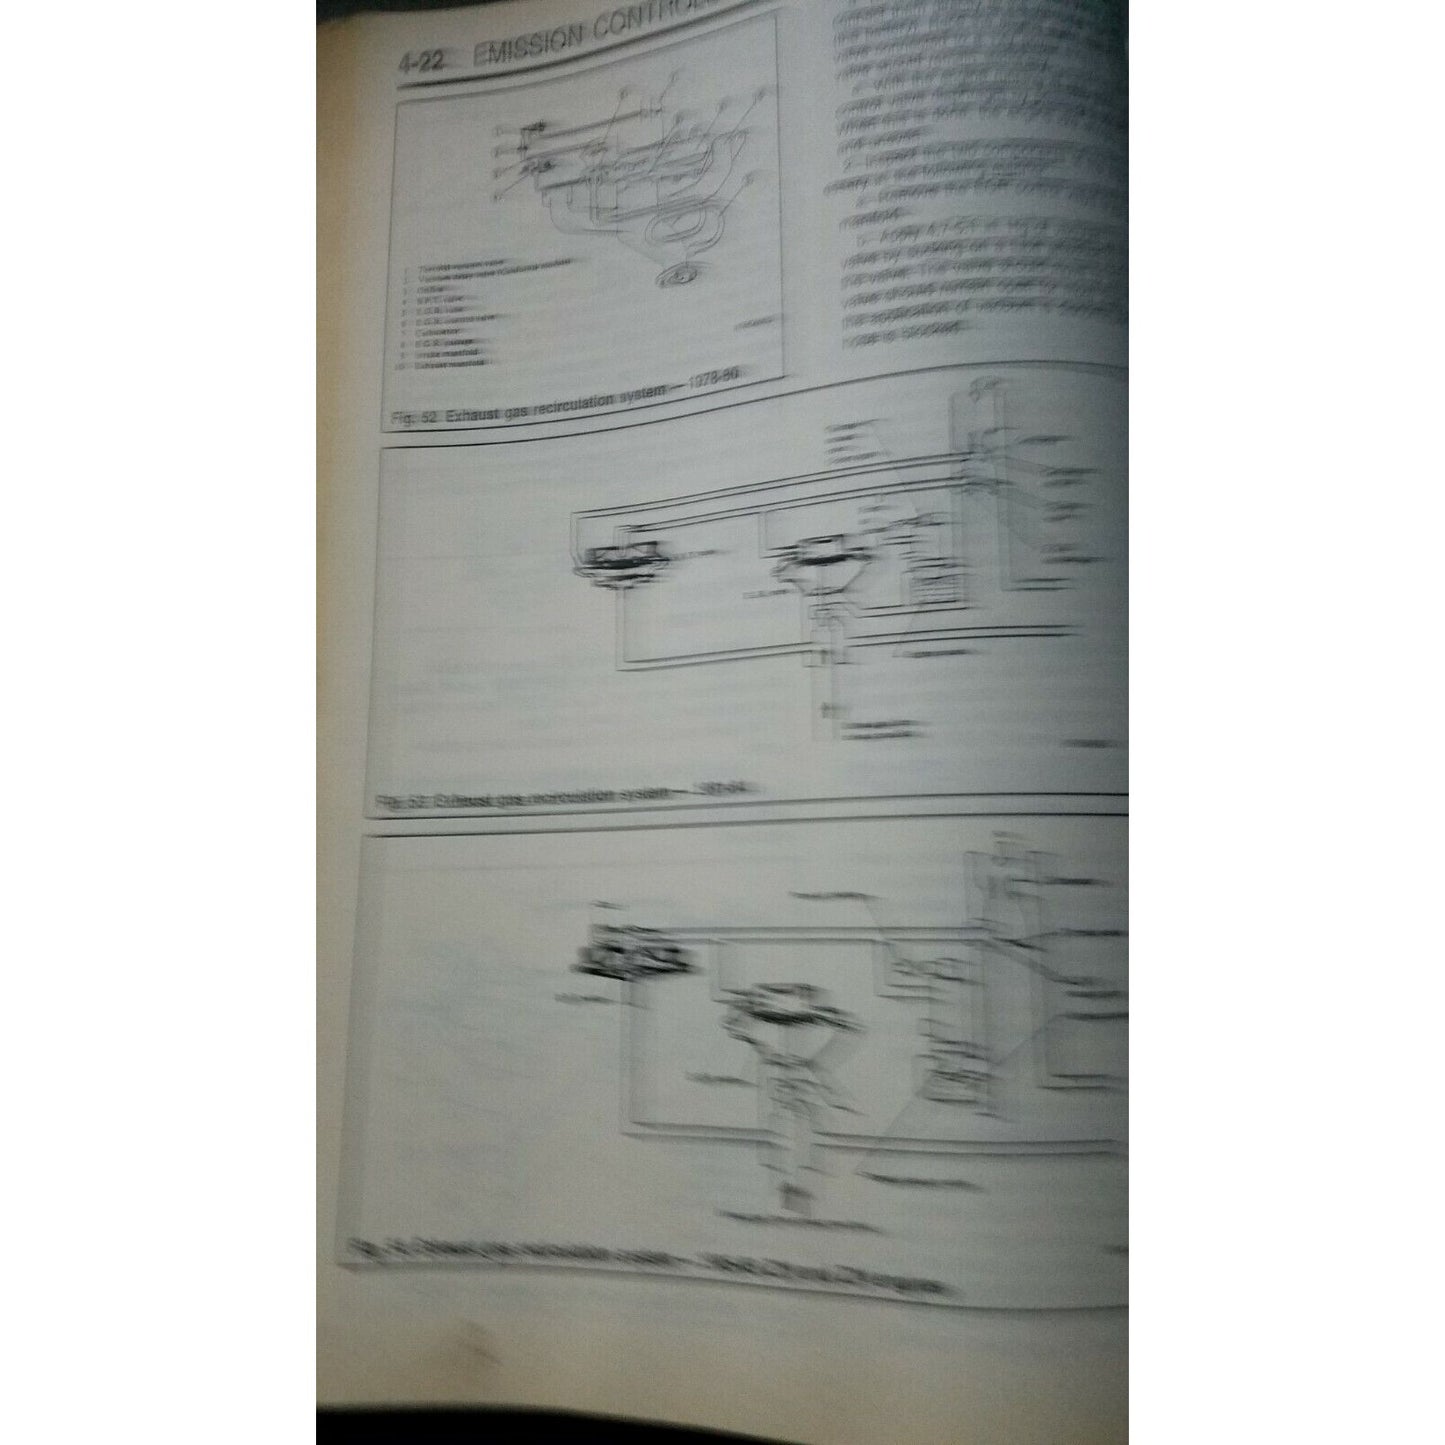 1970-88  Chilton's Nissan Pick-Up Pathfinder  Repair Manual # 8585